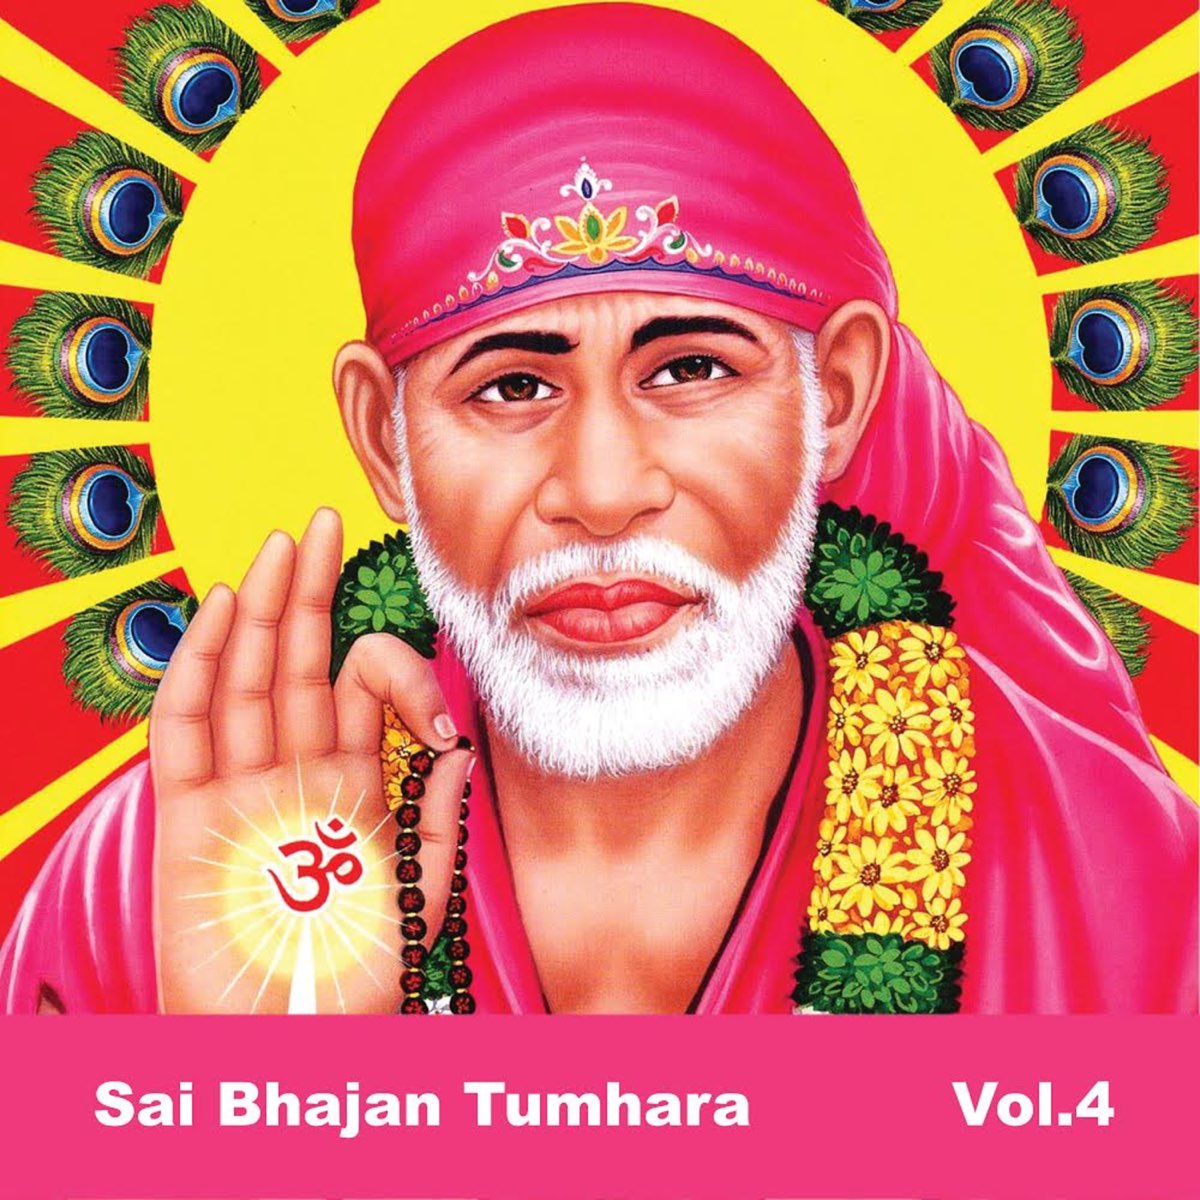 Sai Bhajan Tumhara, Vol. 4 - EP by Various Artists on Apple Music